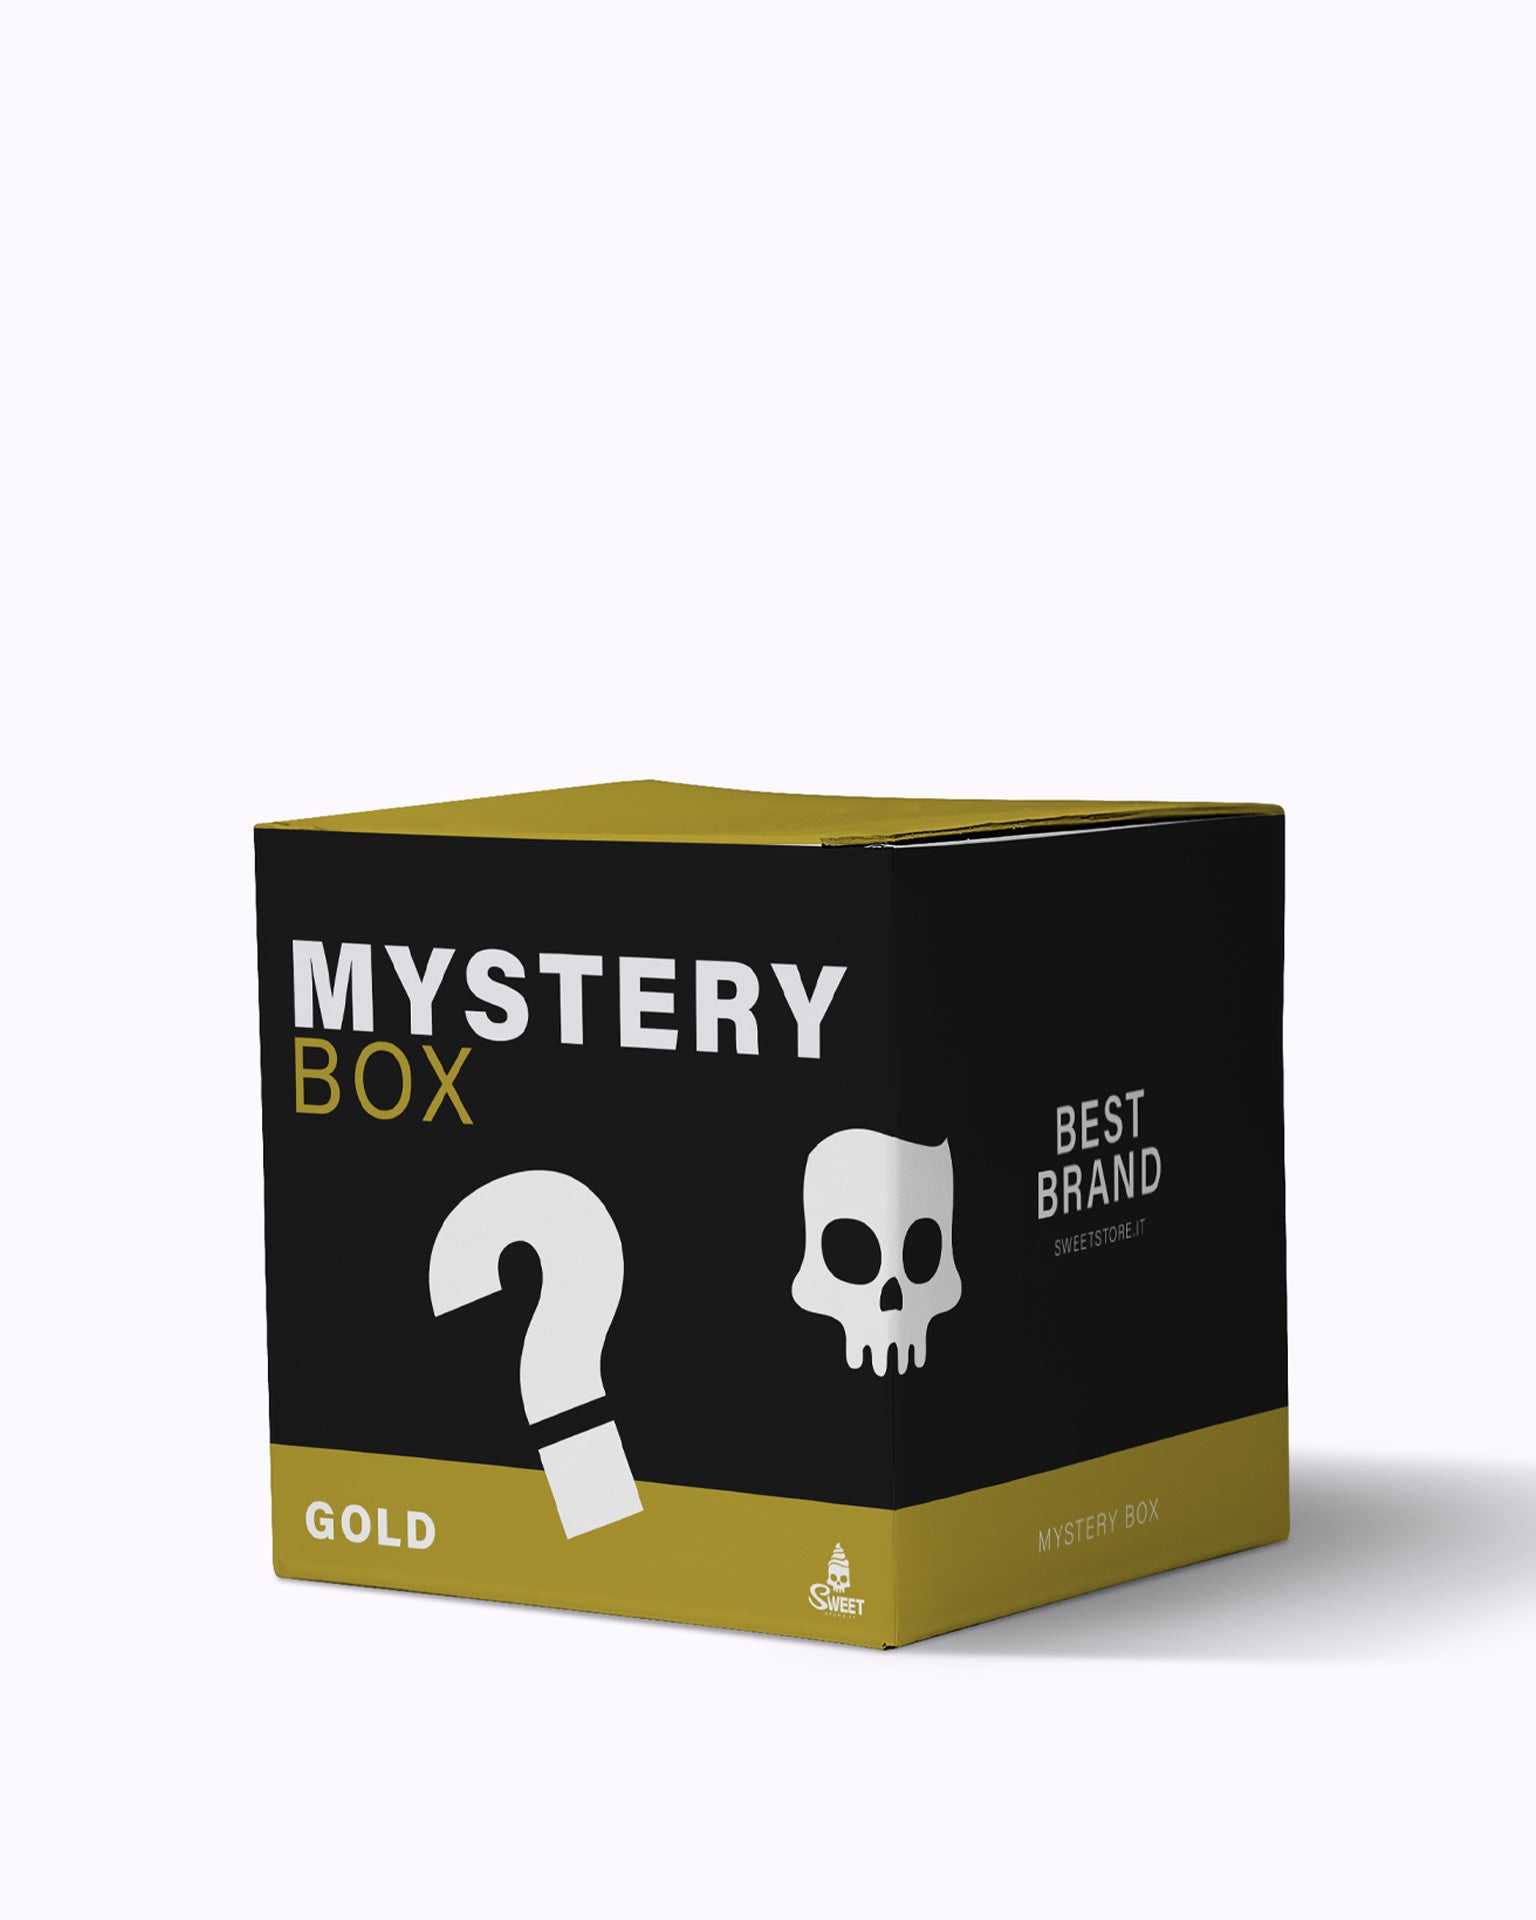 GOLD MYSTERY BOX